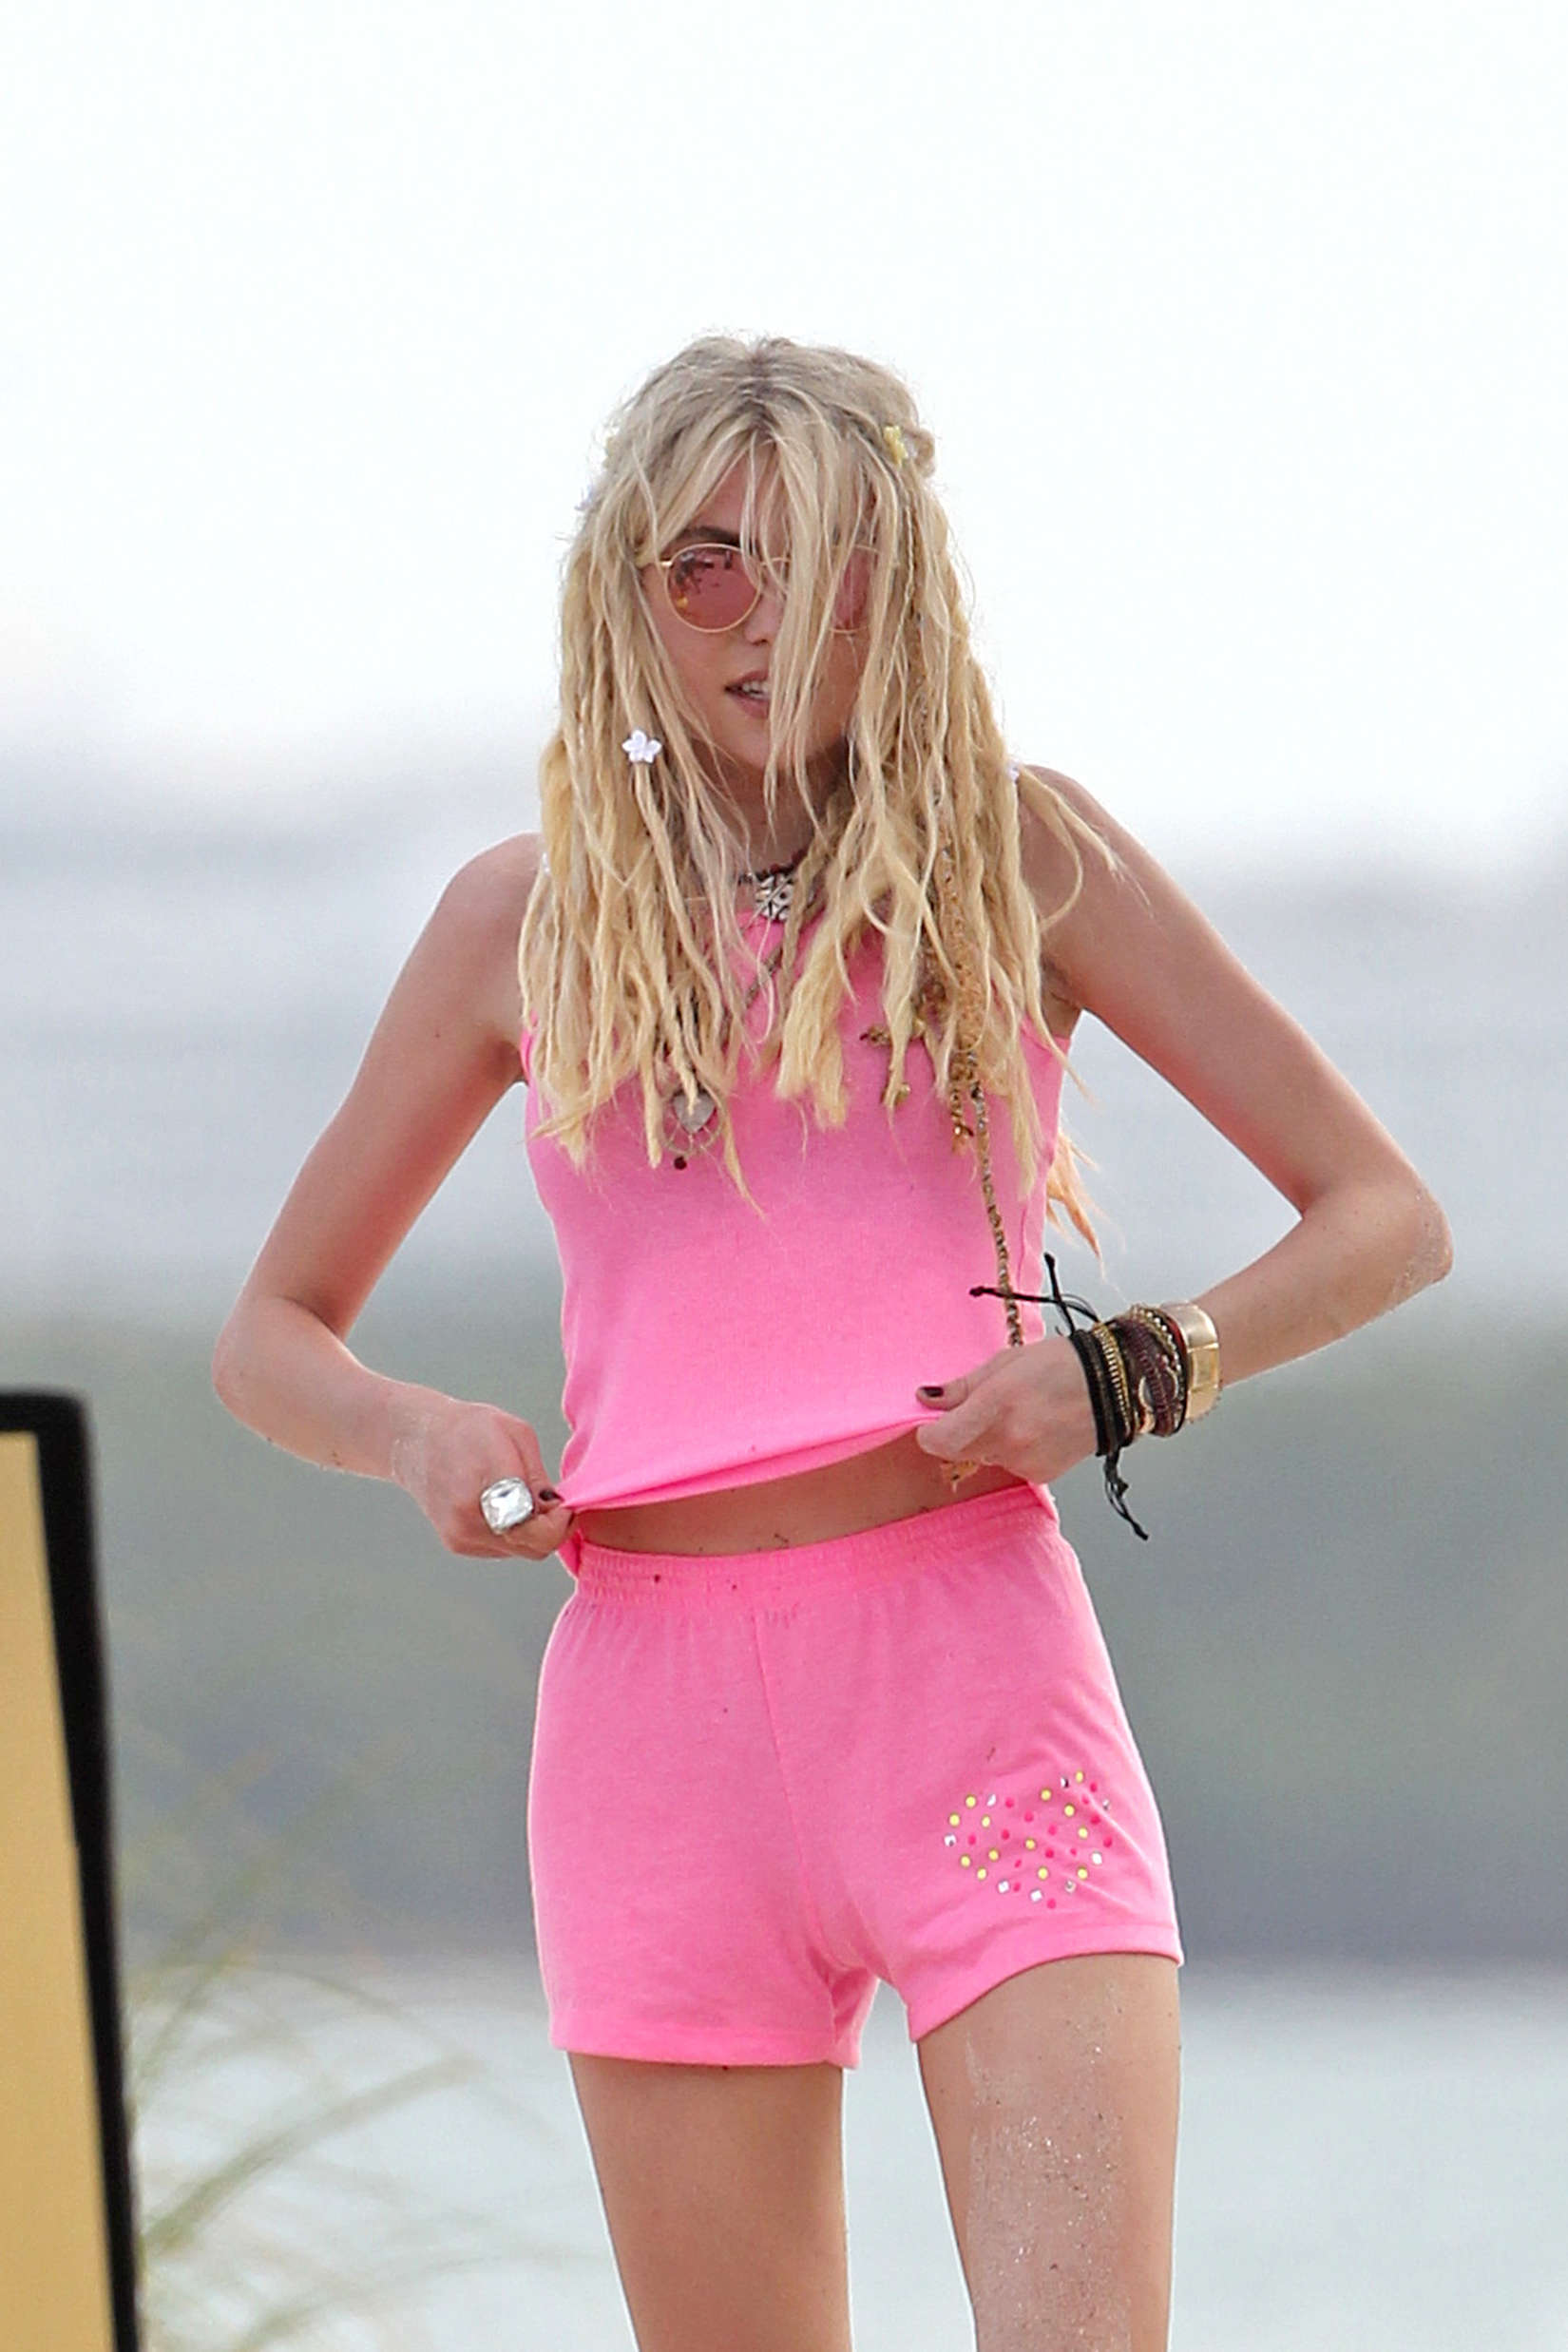 Taylor Momsen 2014 : Taylor Momsen at the beach in pink -22. 